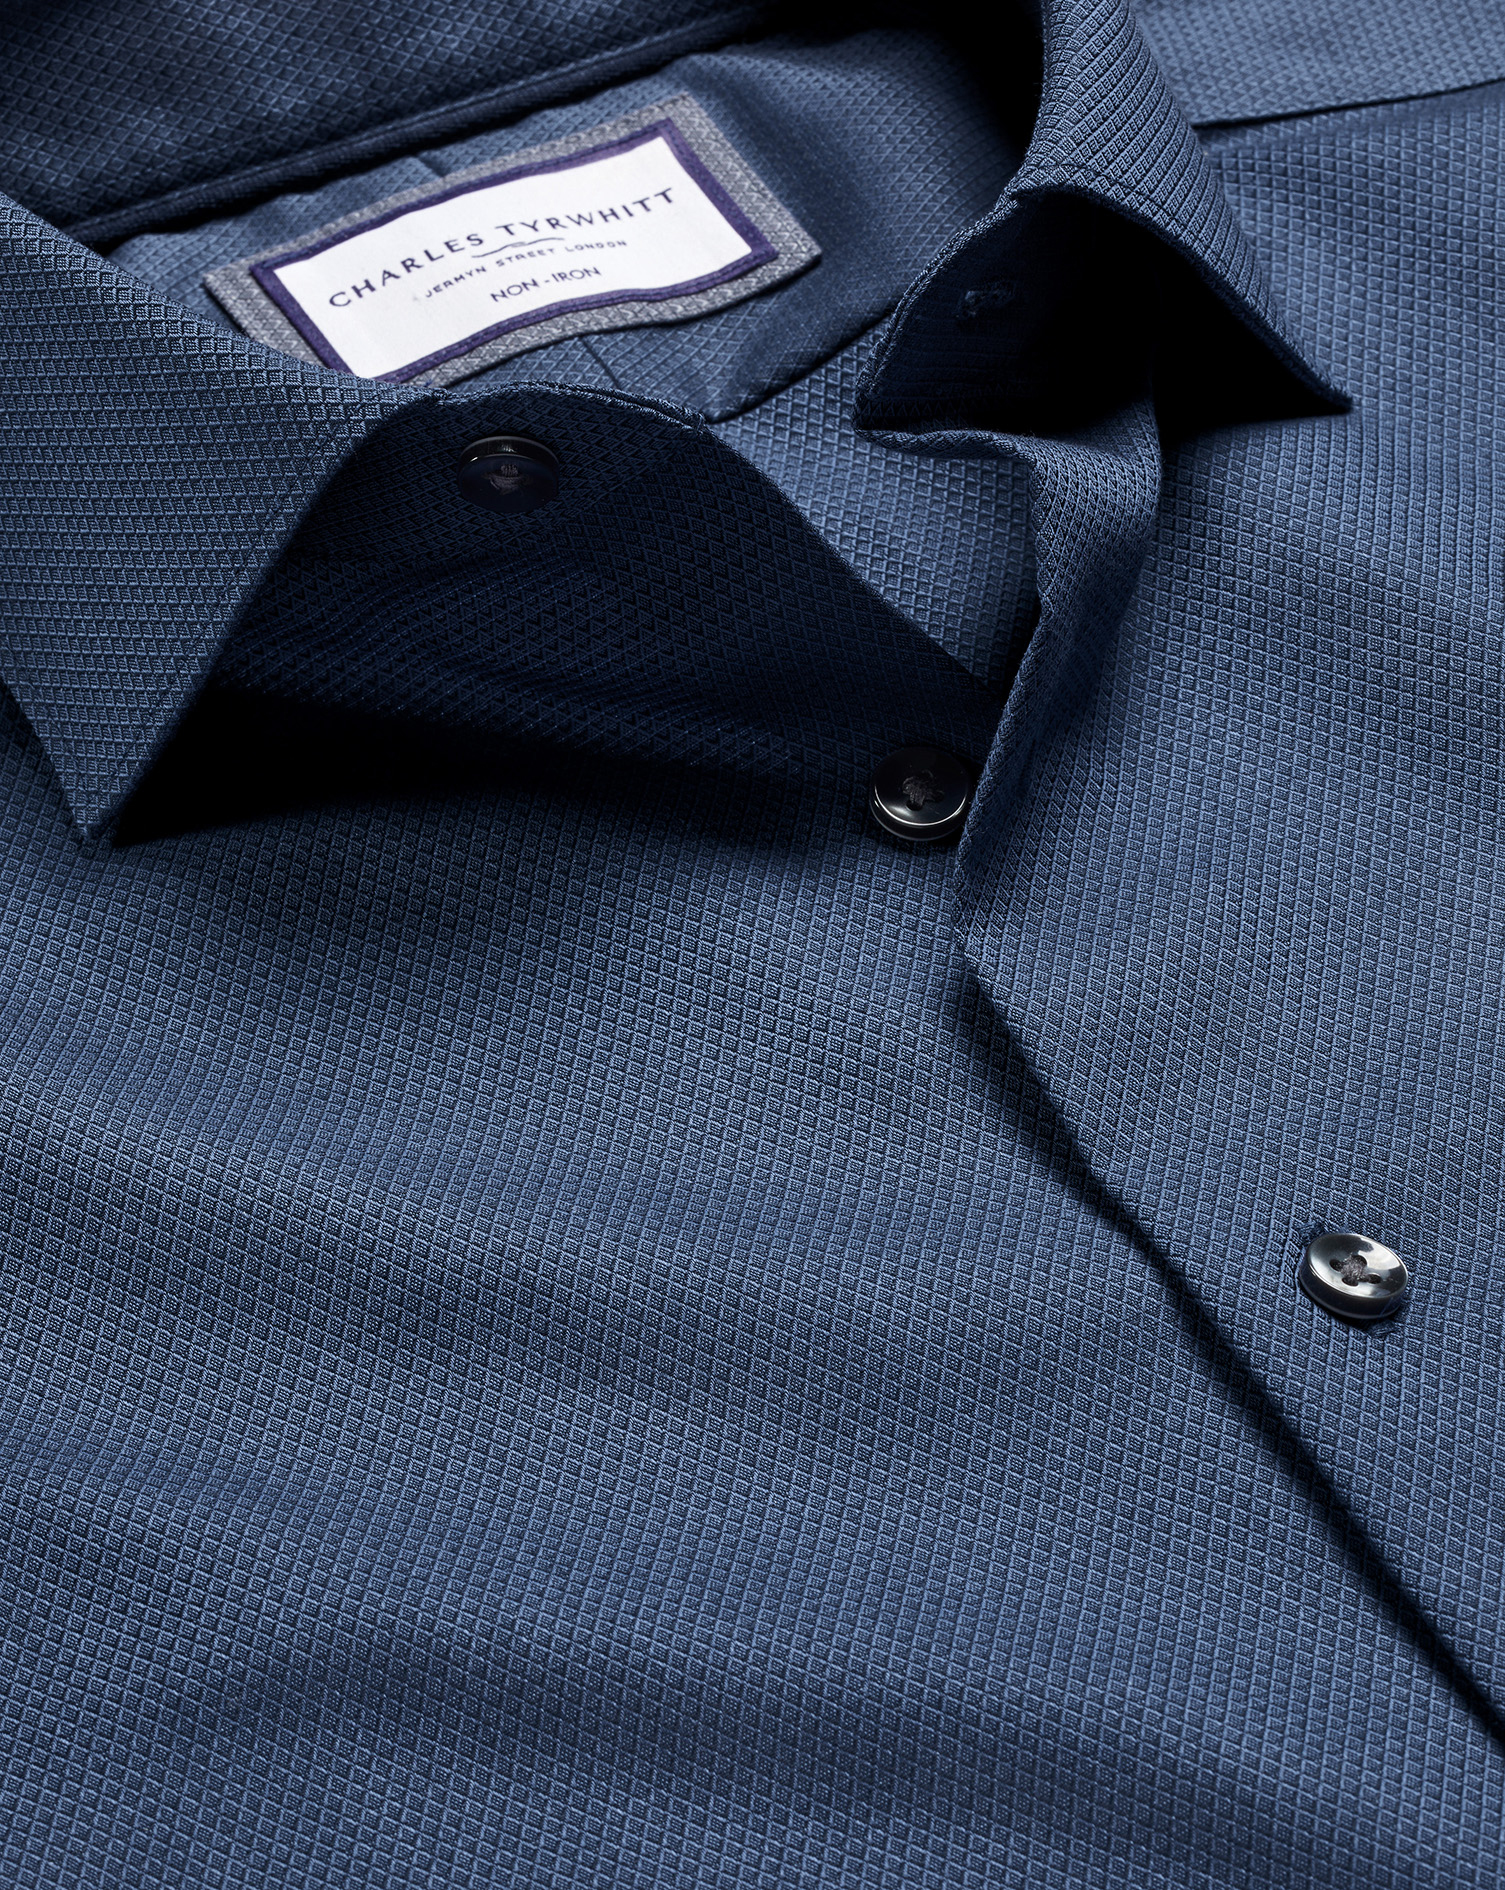 Men's Charles Tyrwhitt Non-Iron Diamond Stretch Texture Dress Shirt - Denim Blue Single Cuff Size 17